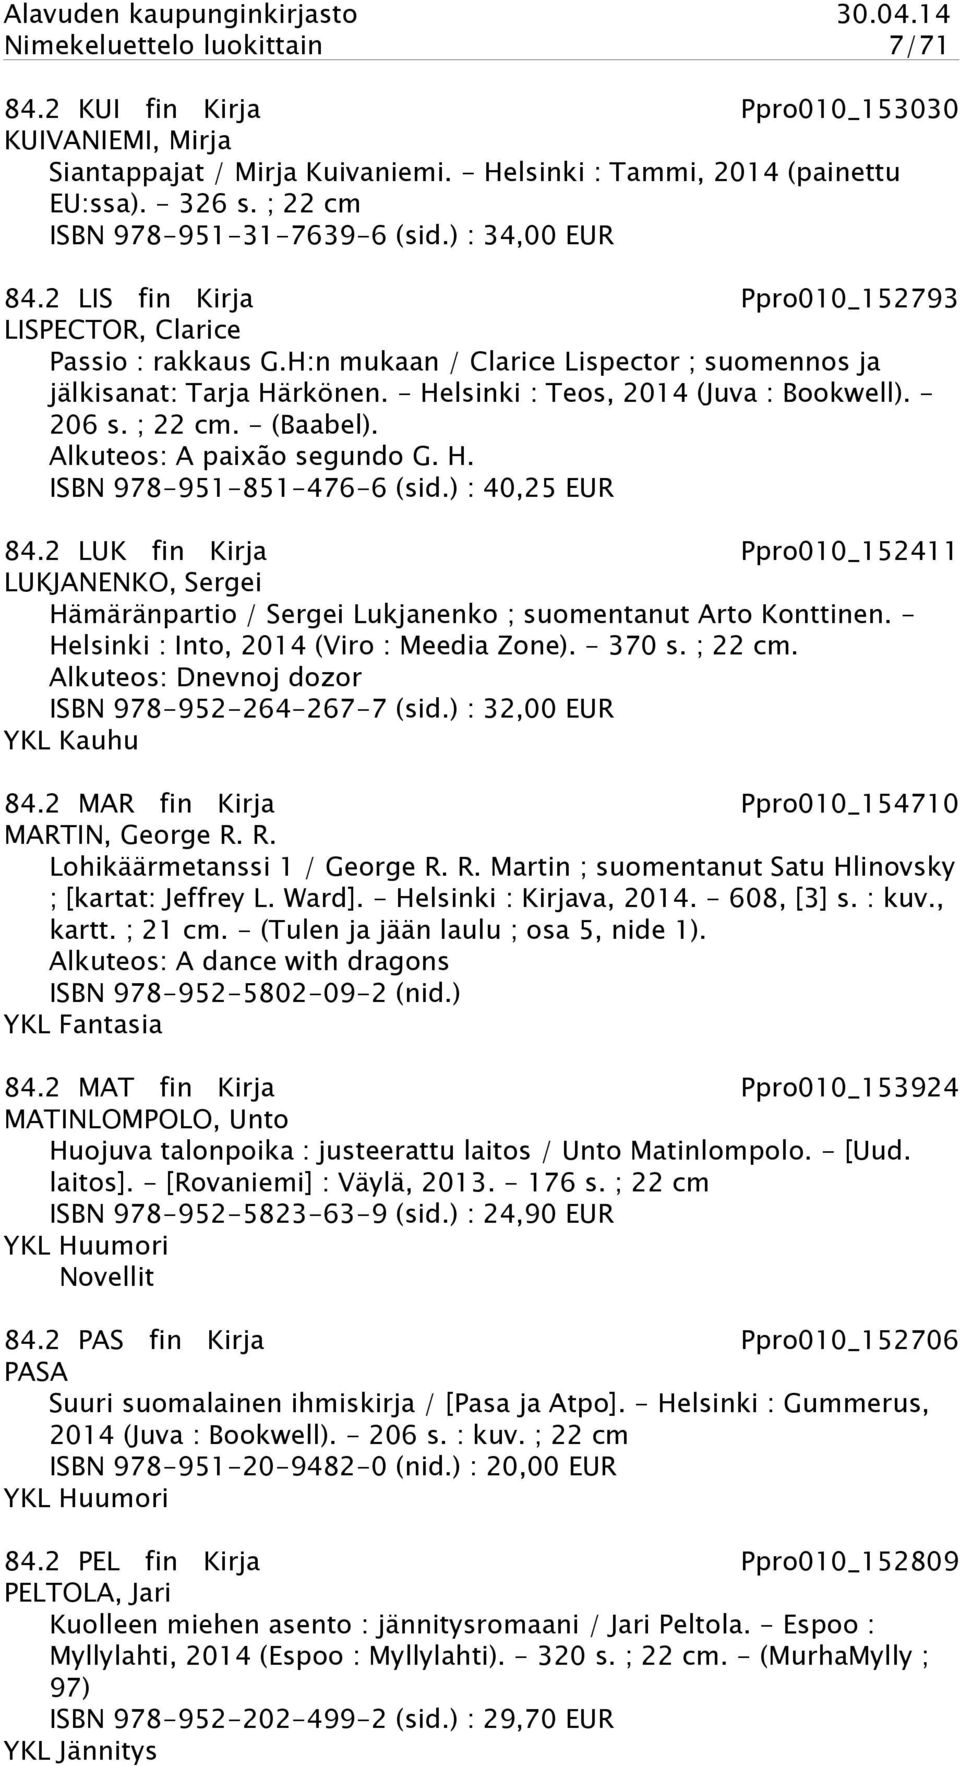 - Helsinki : Teos, 2014 (Juva : Bookwell). - 206 s. ; 22 cm. - (Baabel). Alkuteos: A paixão segundo G. H. ISBN 978-951-851-476-6 (sid.) : 40,25 EUR 84.